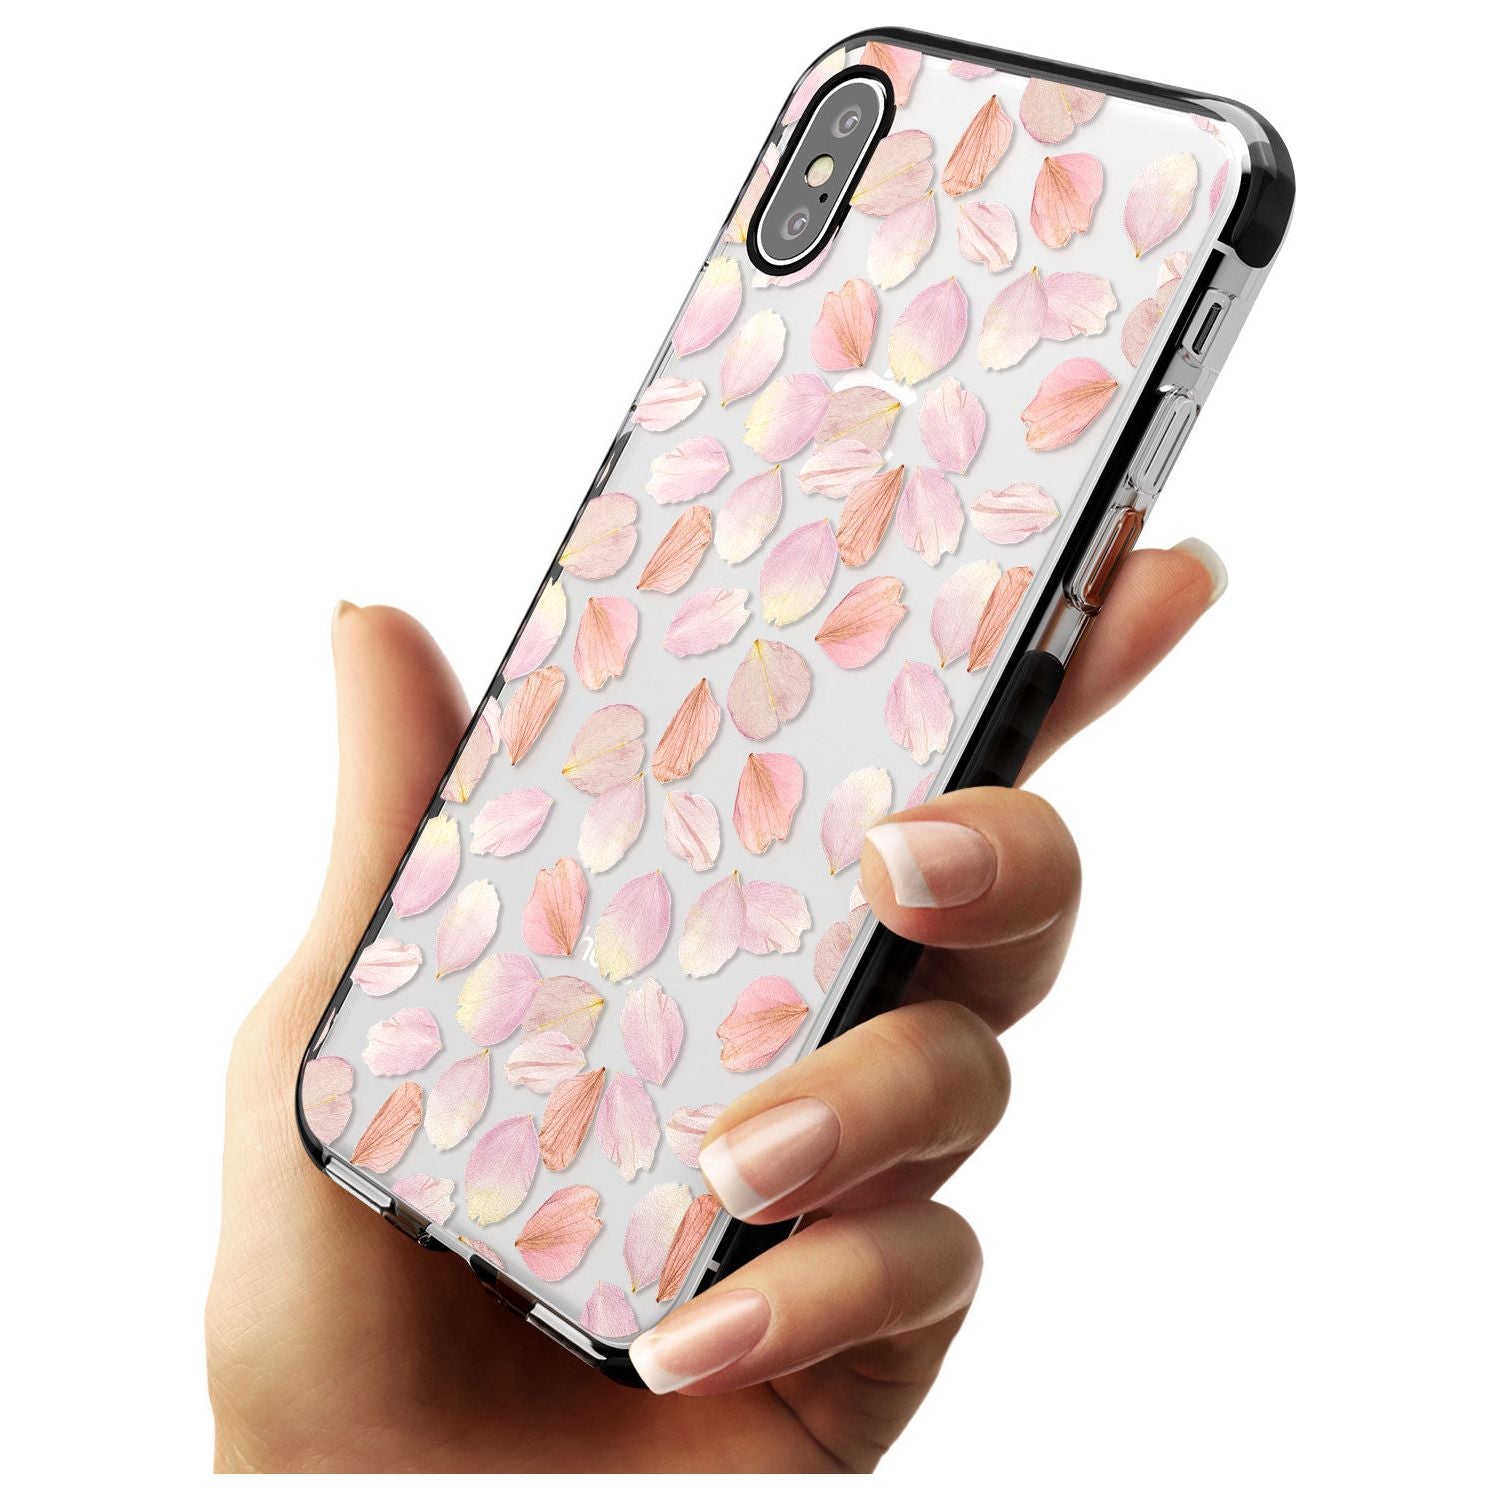 Pink Petals Transparent Design Black Impact Phone Case for iPhone X XS Max XR